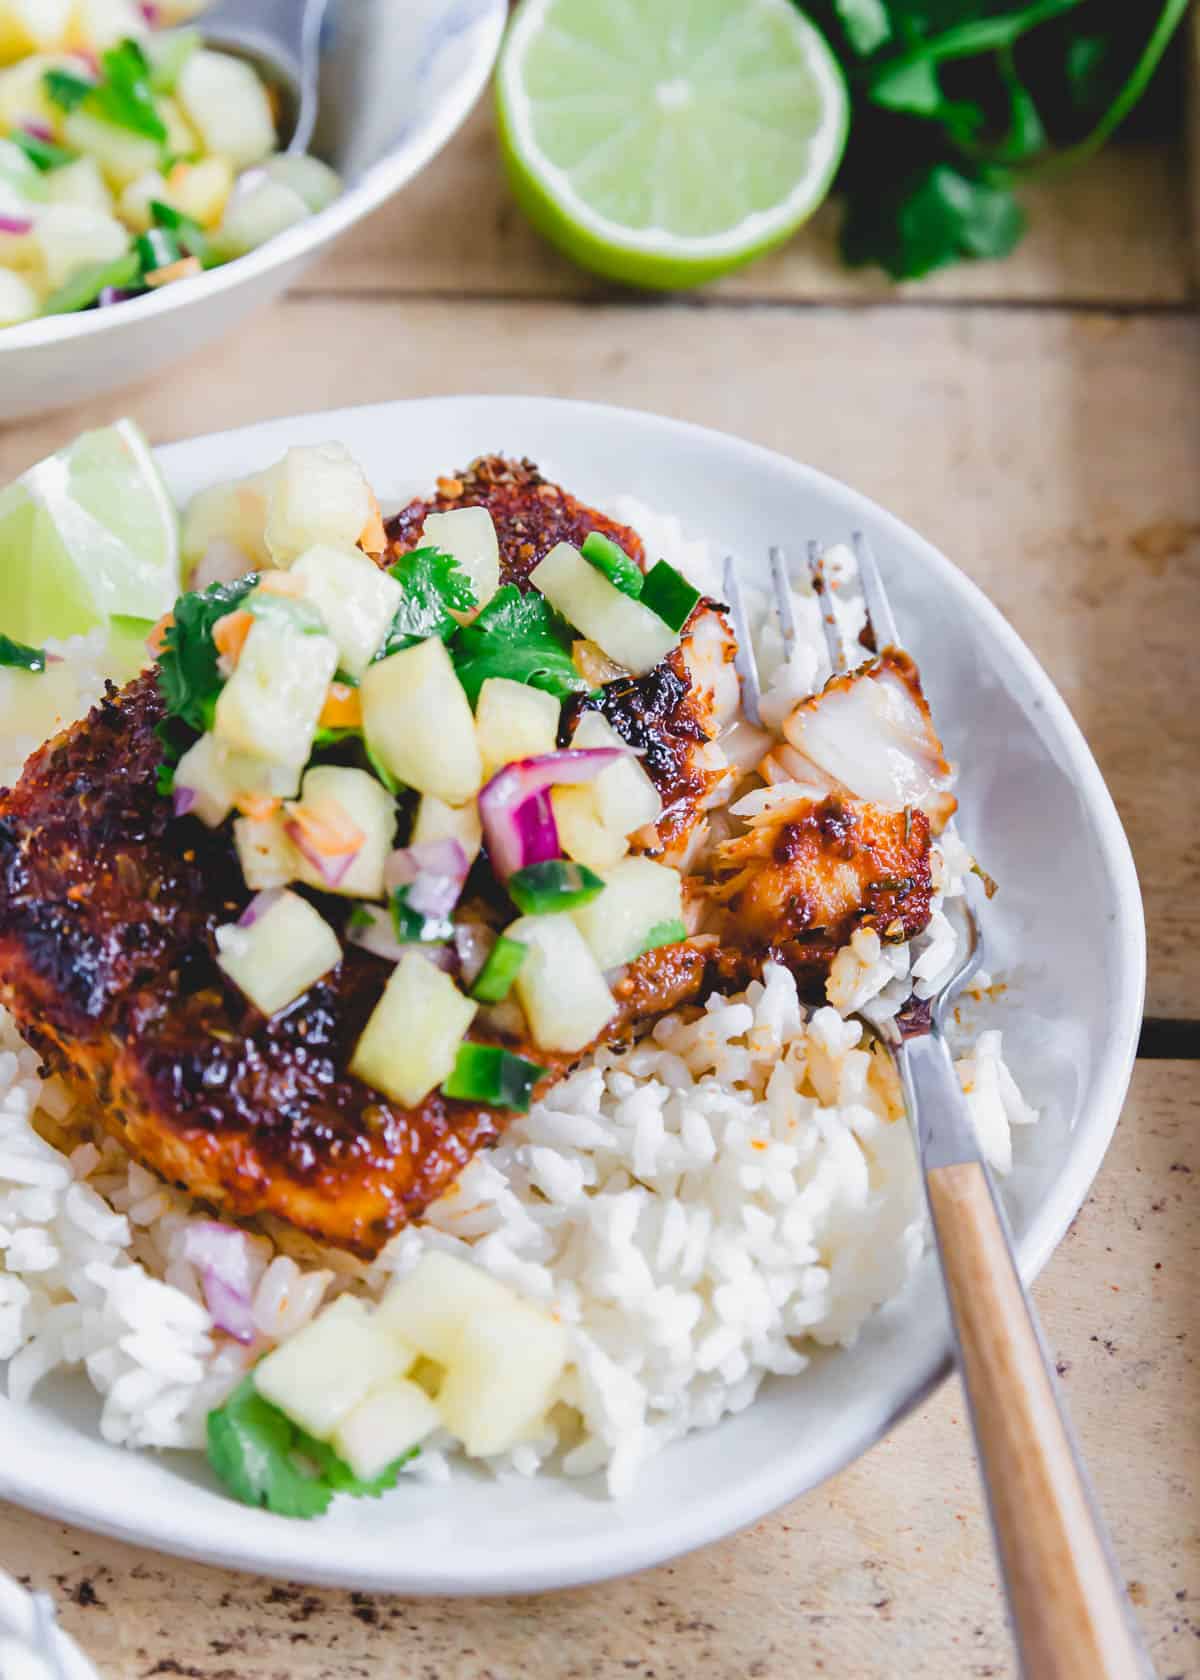 Blackened mahi mahi recipe served with pineapple salsa and rice on a plate with a fork.